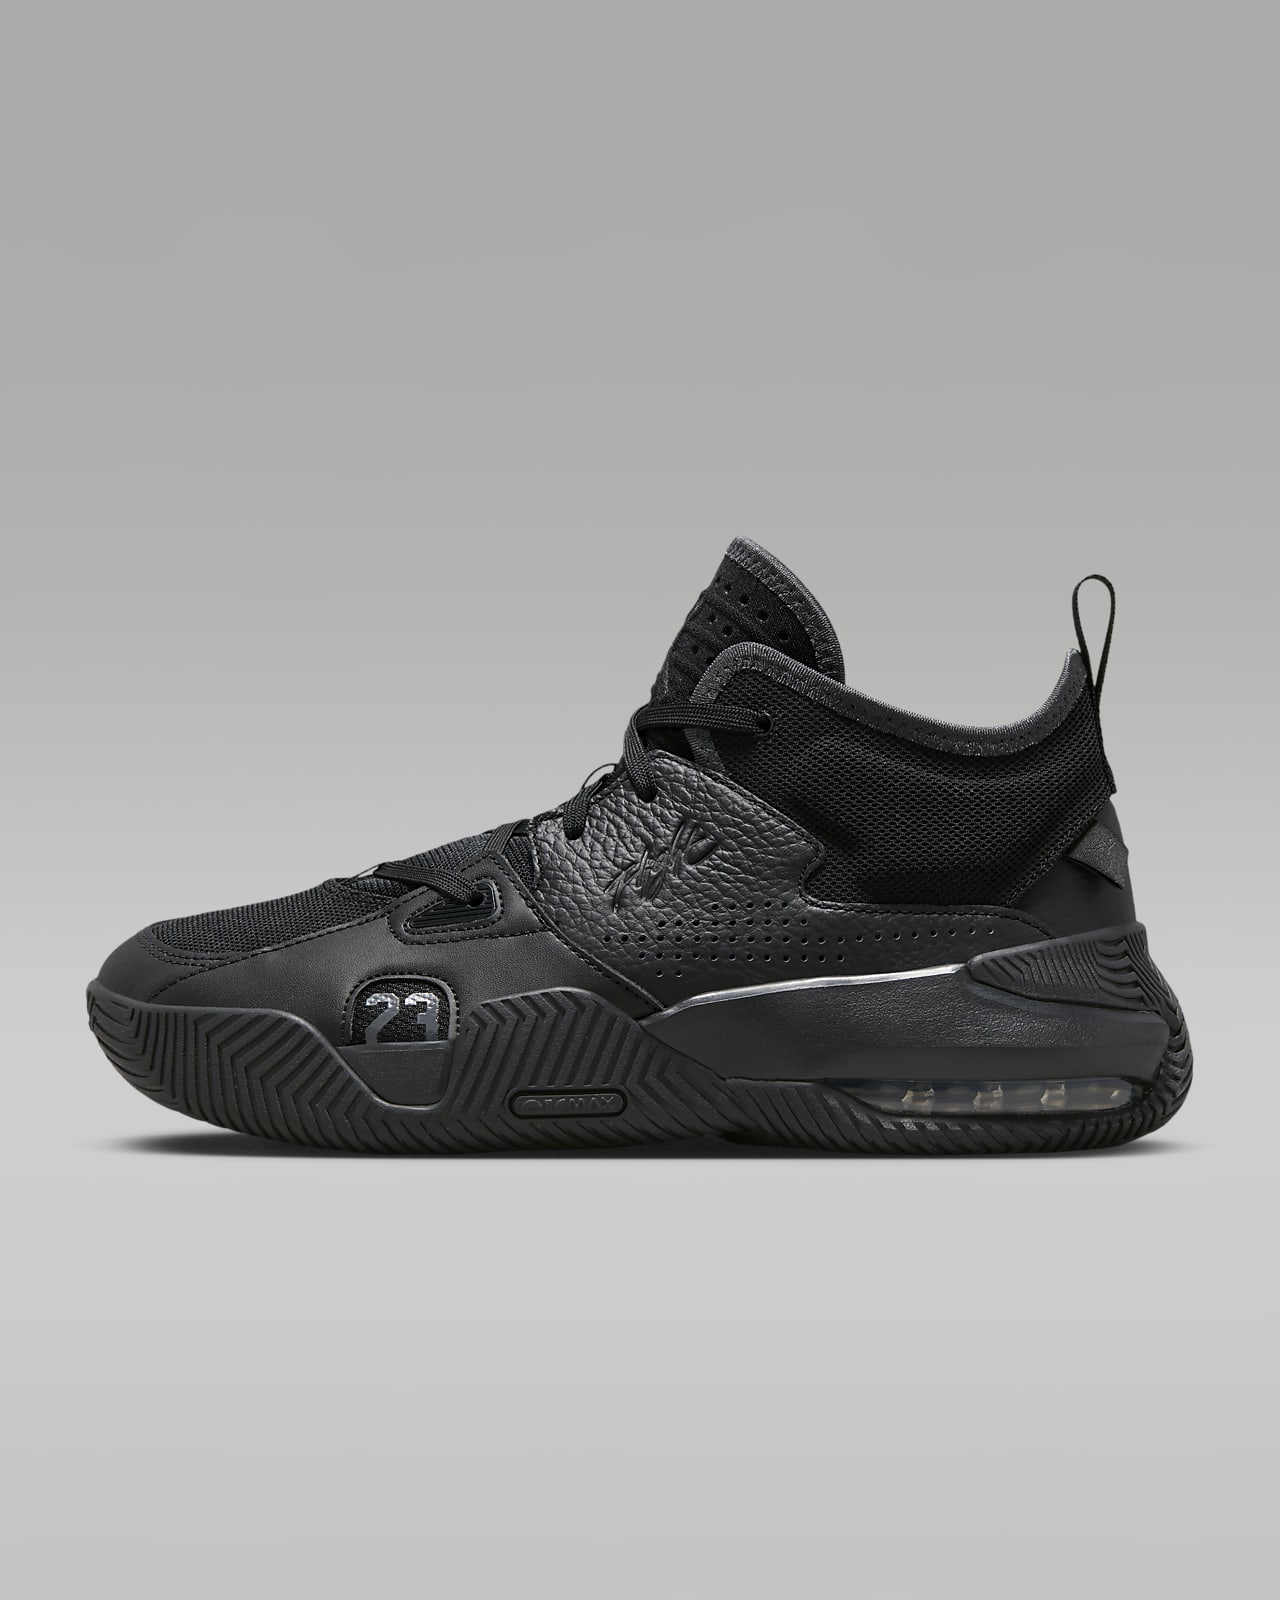 Nike Air Jordan 11/29 Ultimate Gift of Flight Pack | Size 12, Sneaker